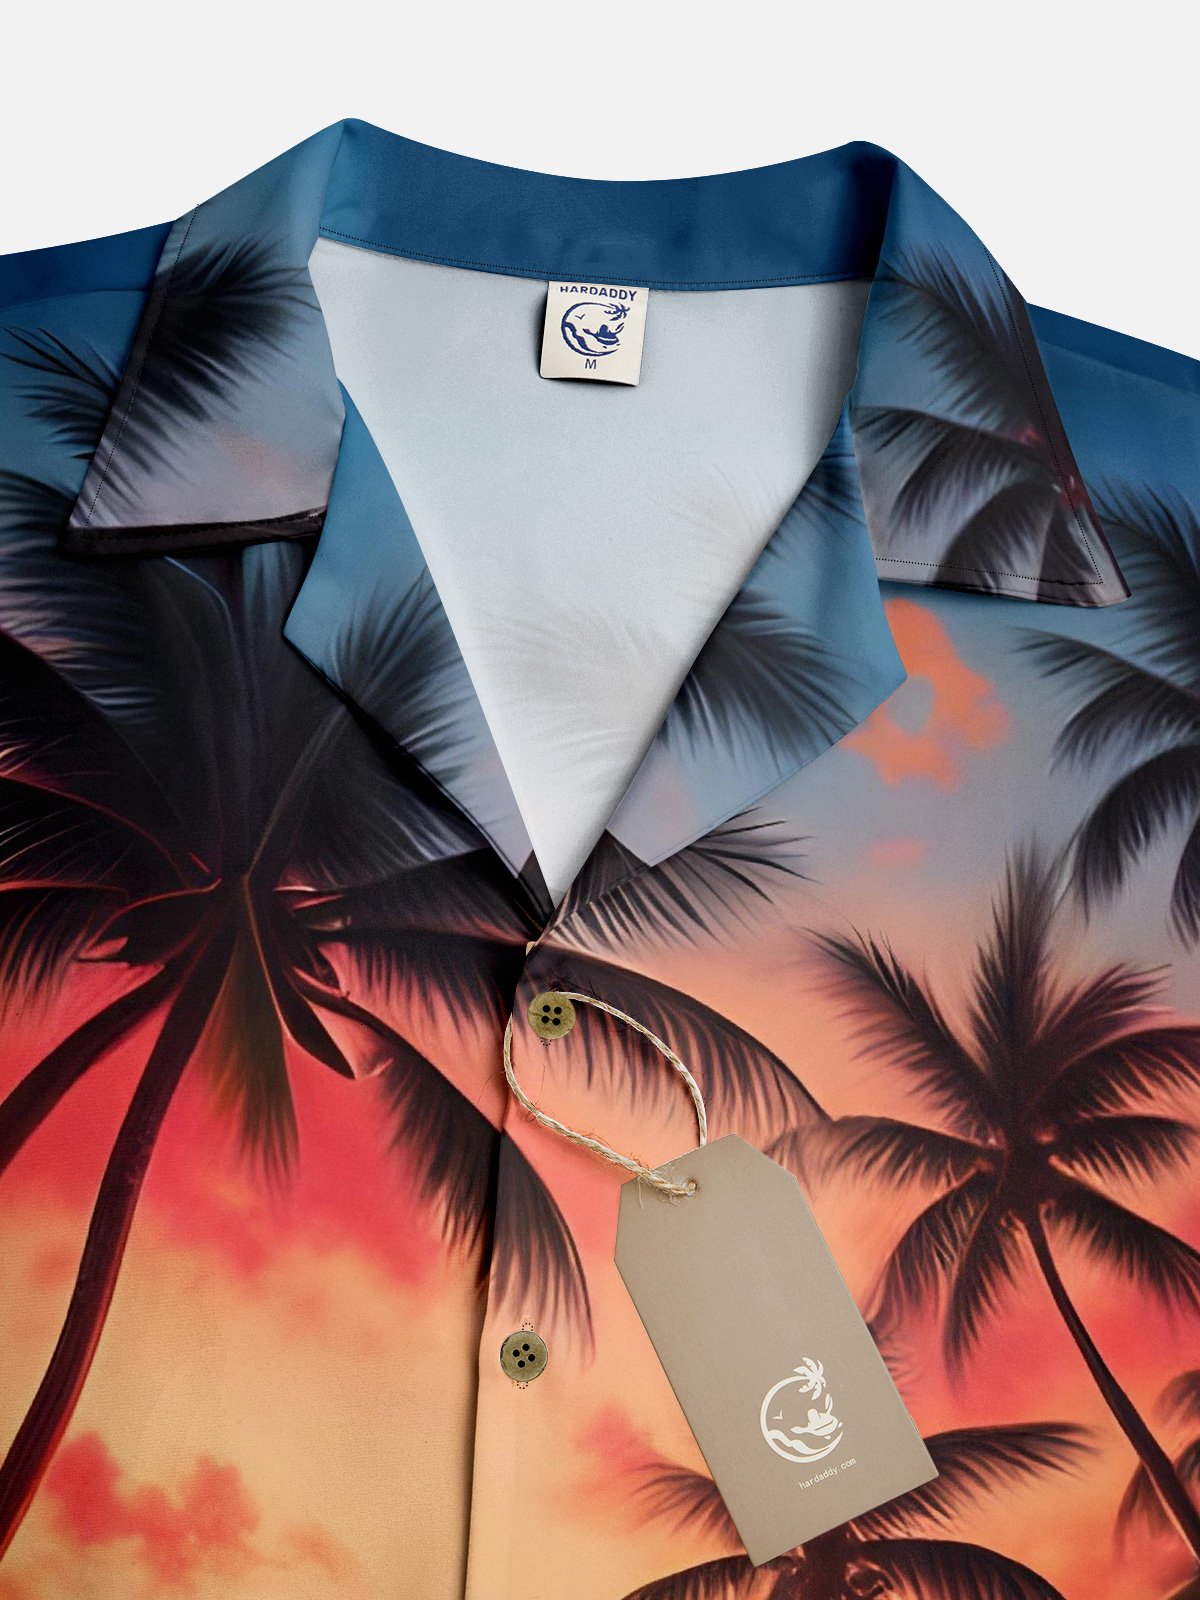 Moisture-wicking Sunset Coconut Tree Hawaiian Shirt